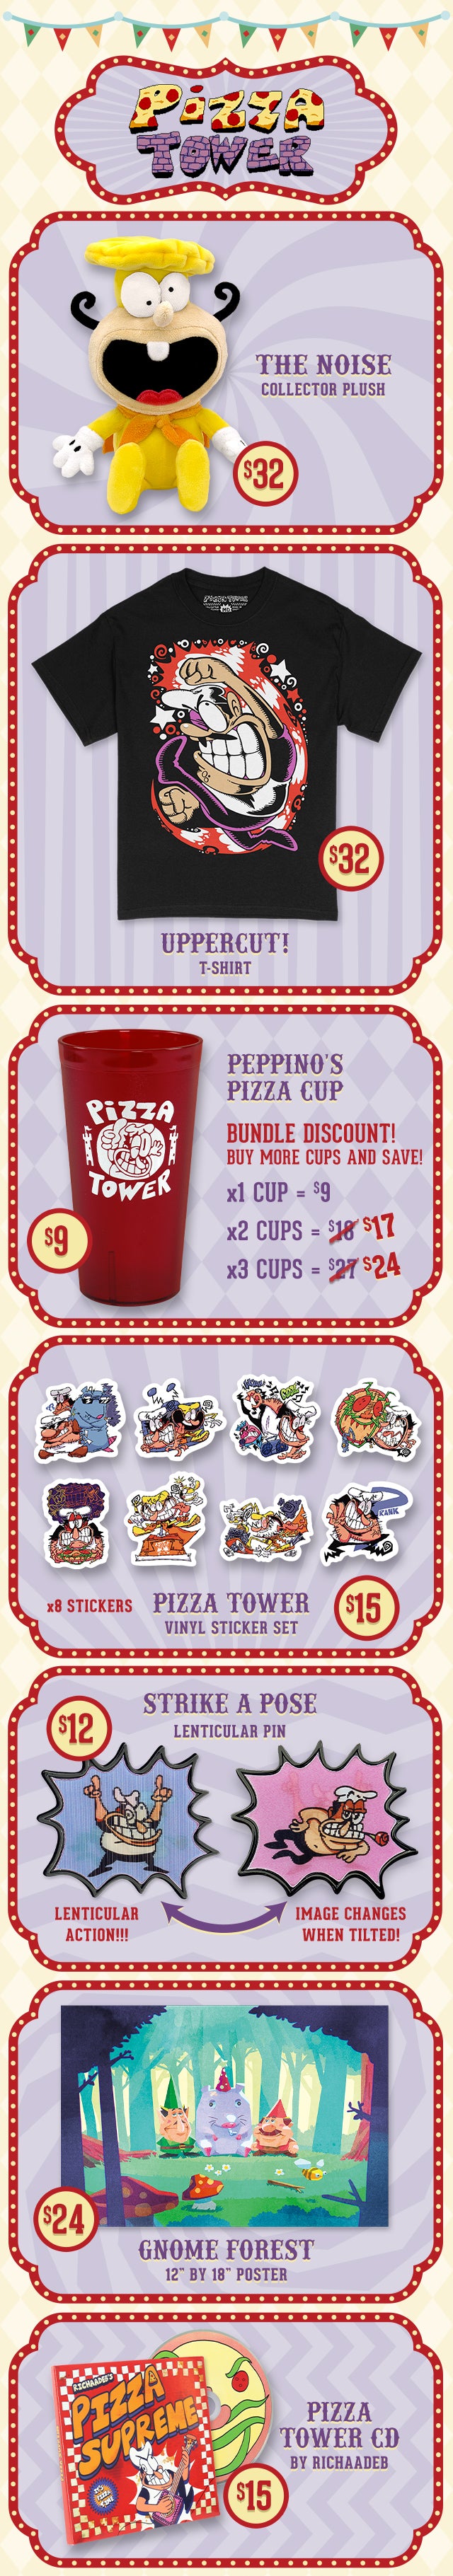 Free pizza tower? - Comic Studio